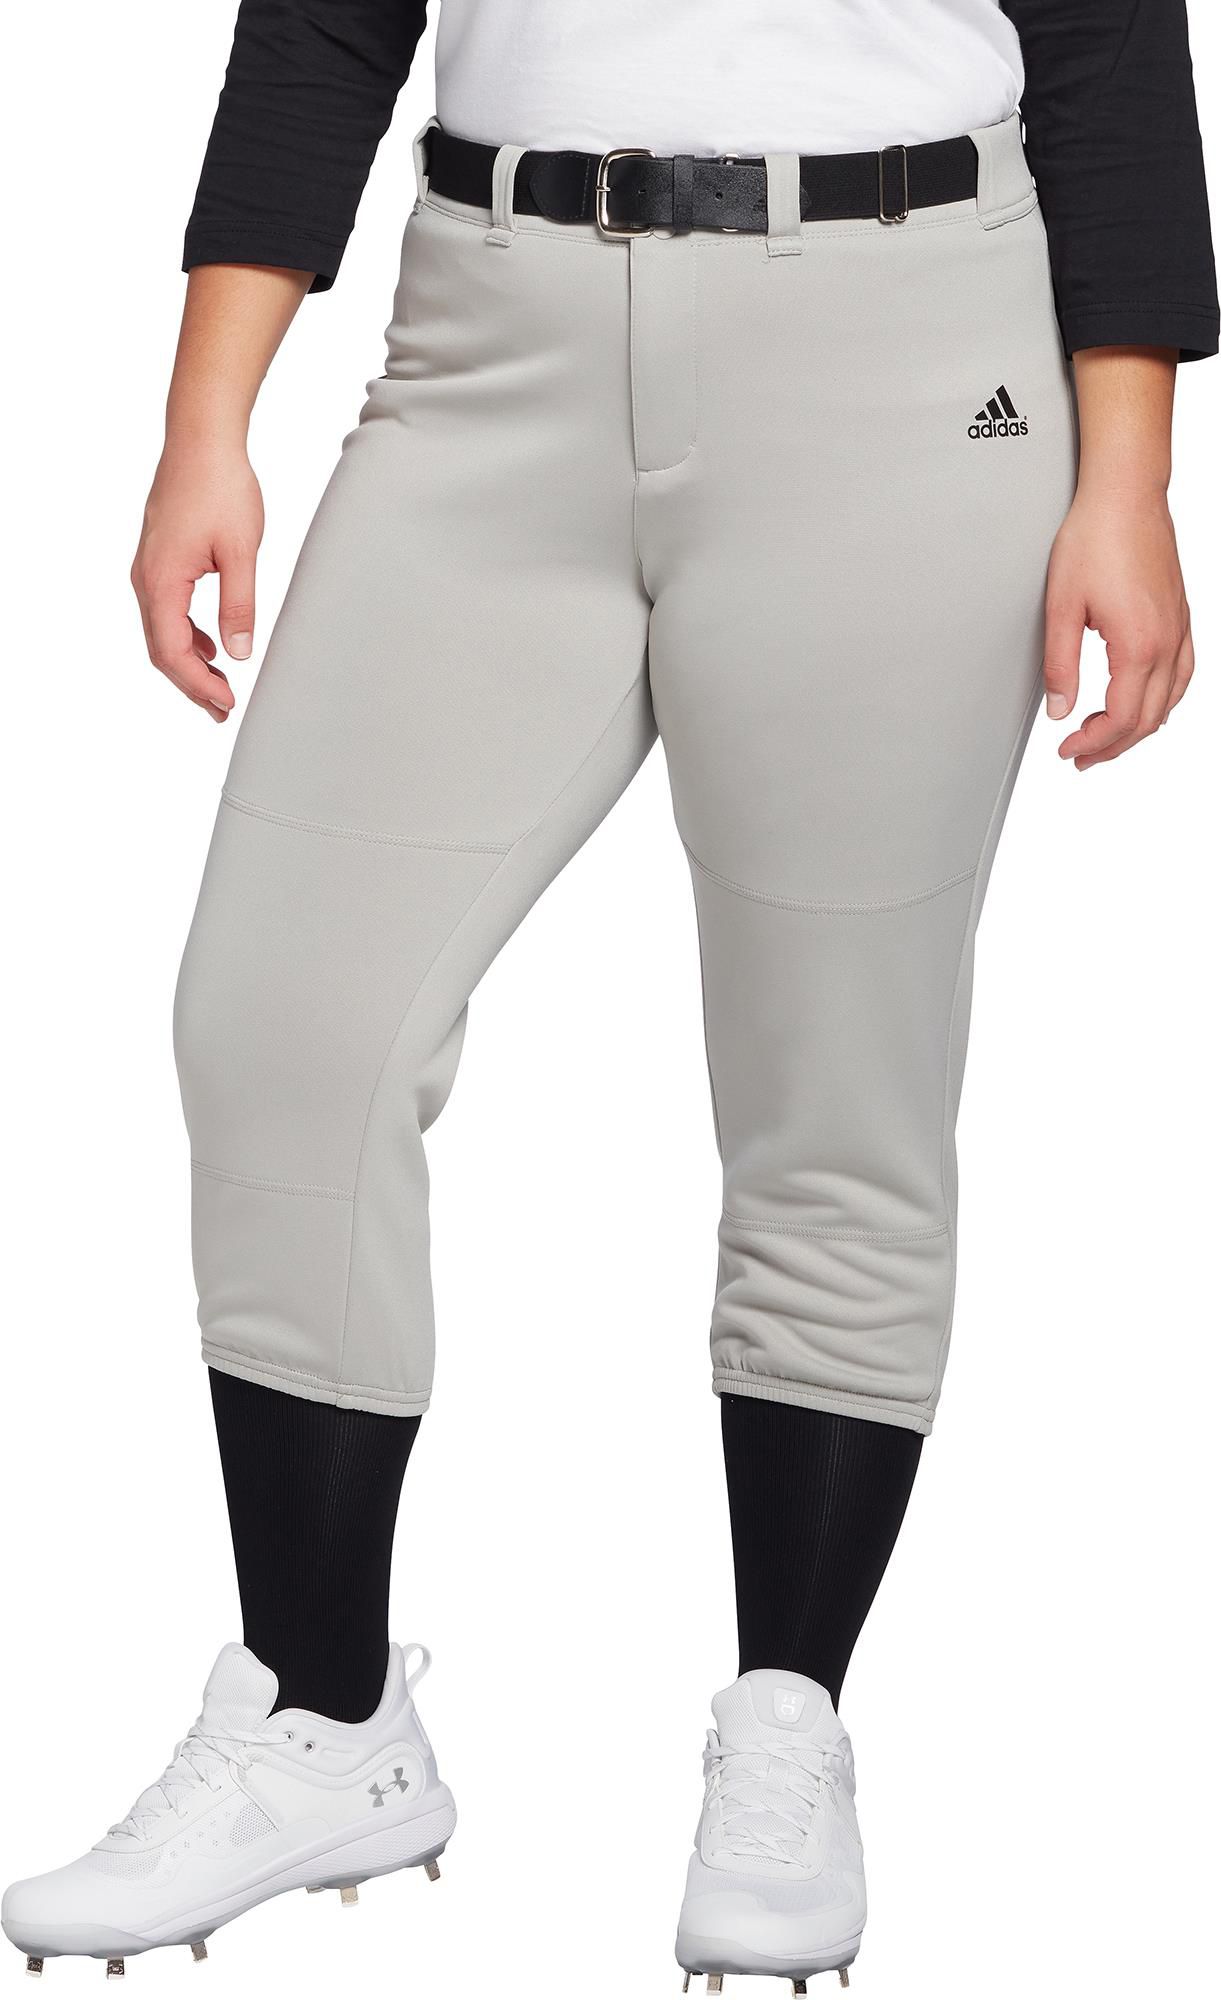 adidas fastpitch softball pants